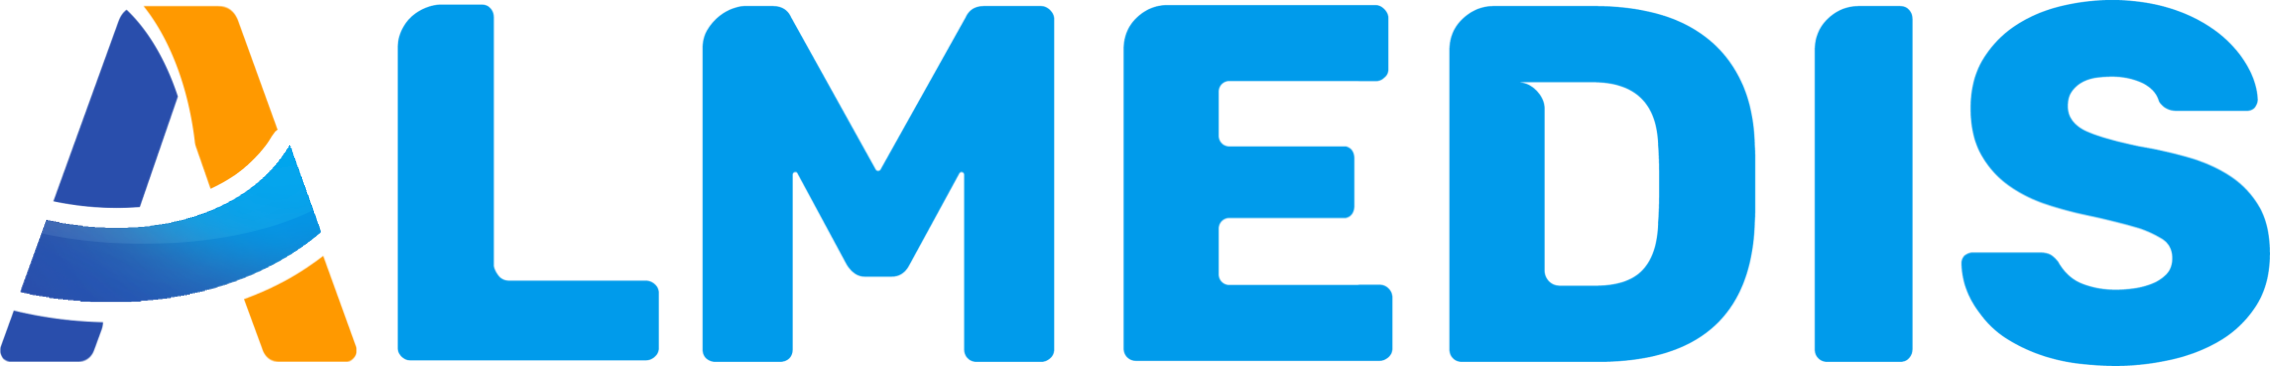 Logotipo ALMEDIS SpA